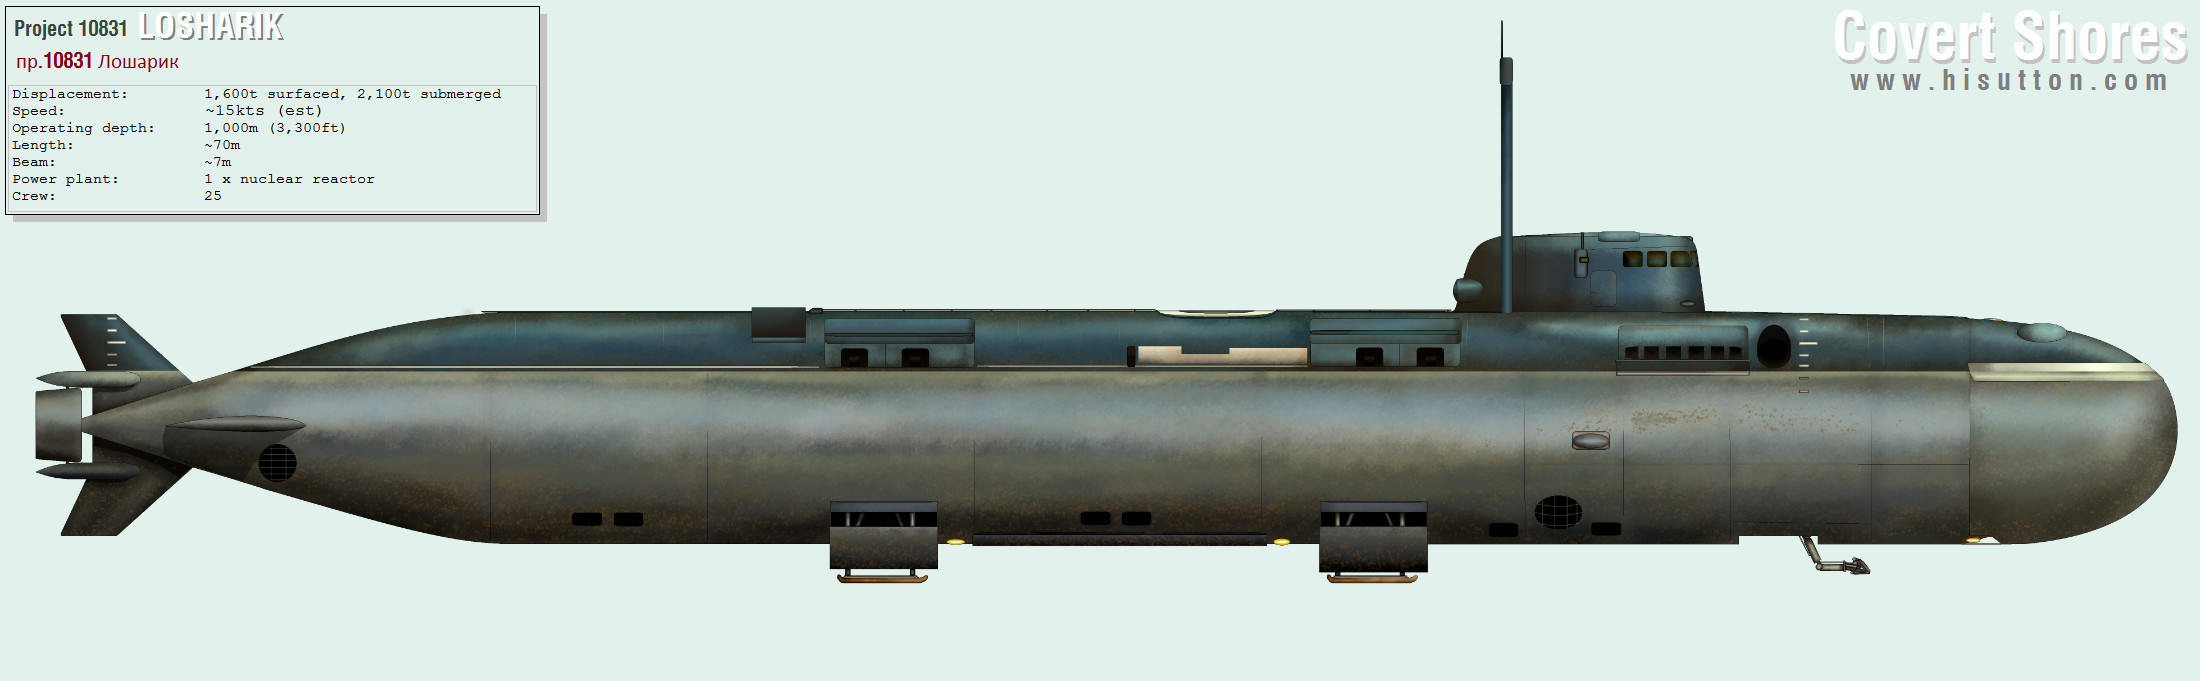 Marfoogle News: This Is Not Good - 14 Dead On Russian Secret Submarine - UPDATE: 